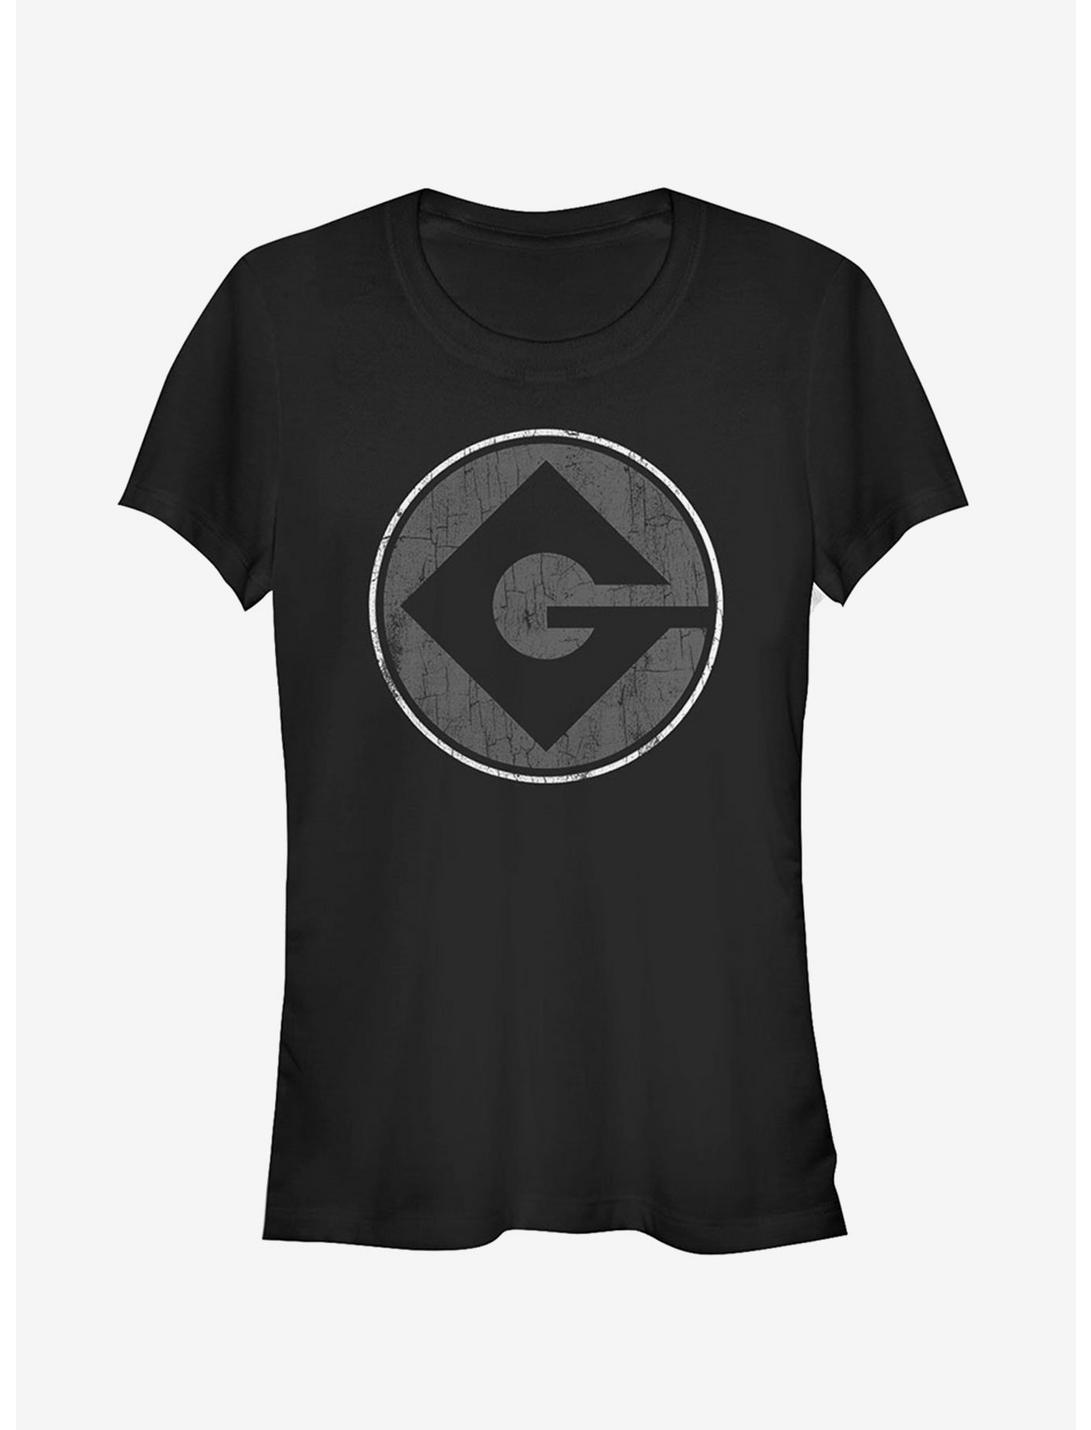 Minion Gru Logo Girls T-Shirt, BLACK, hi-res